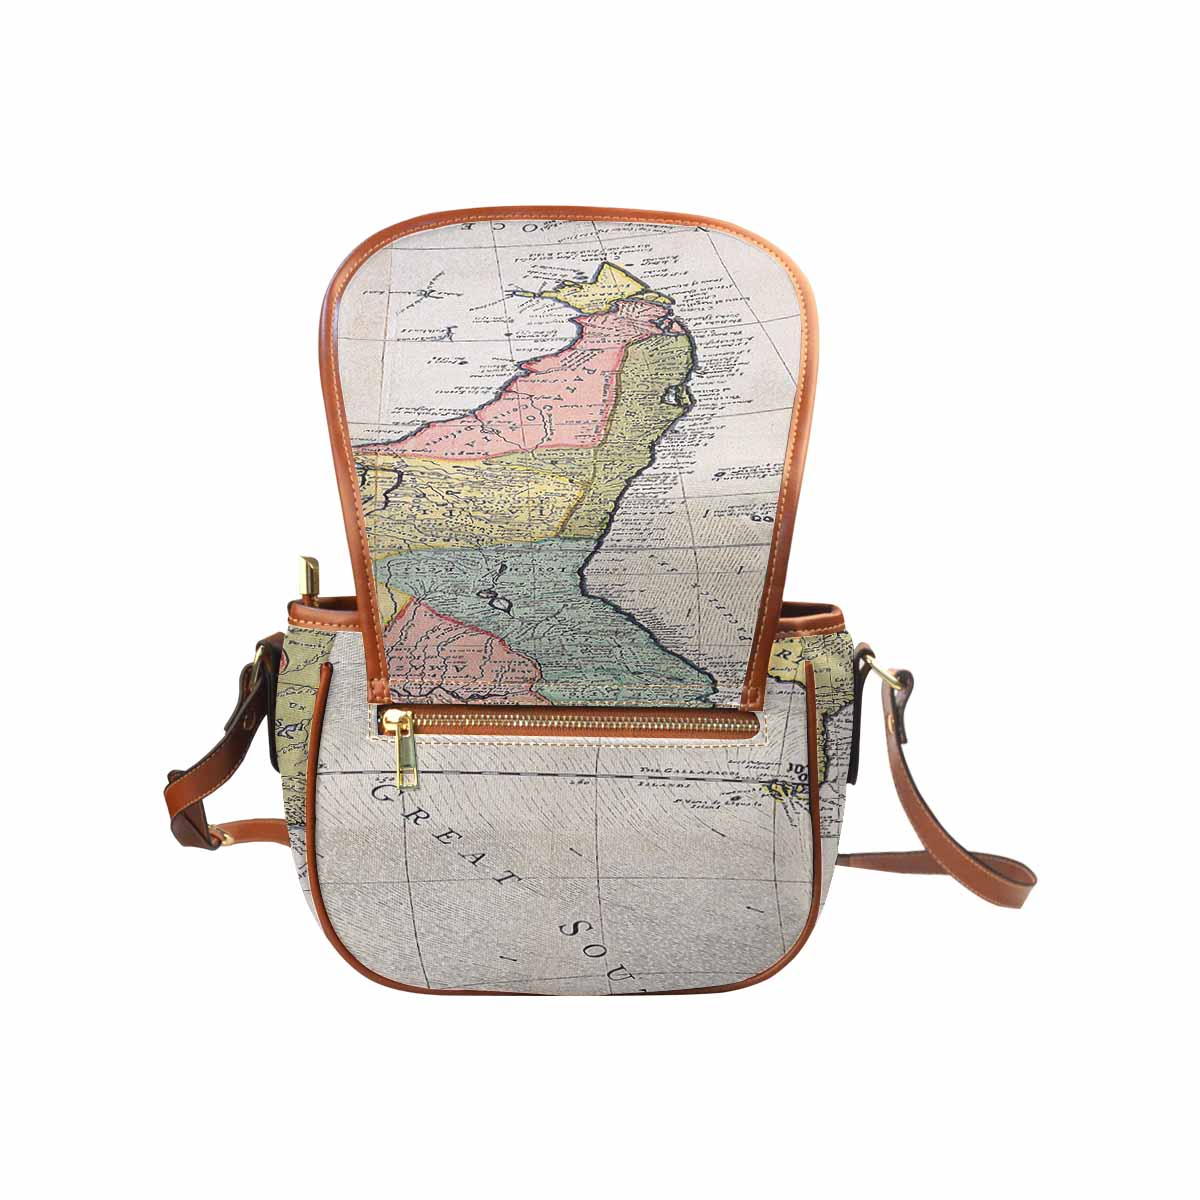 Antique Map design Handbag, saddle bag, Design 40